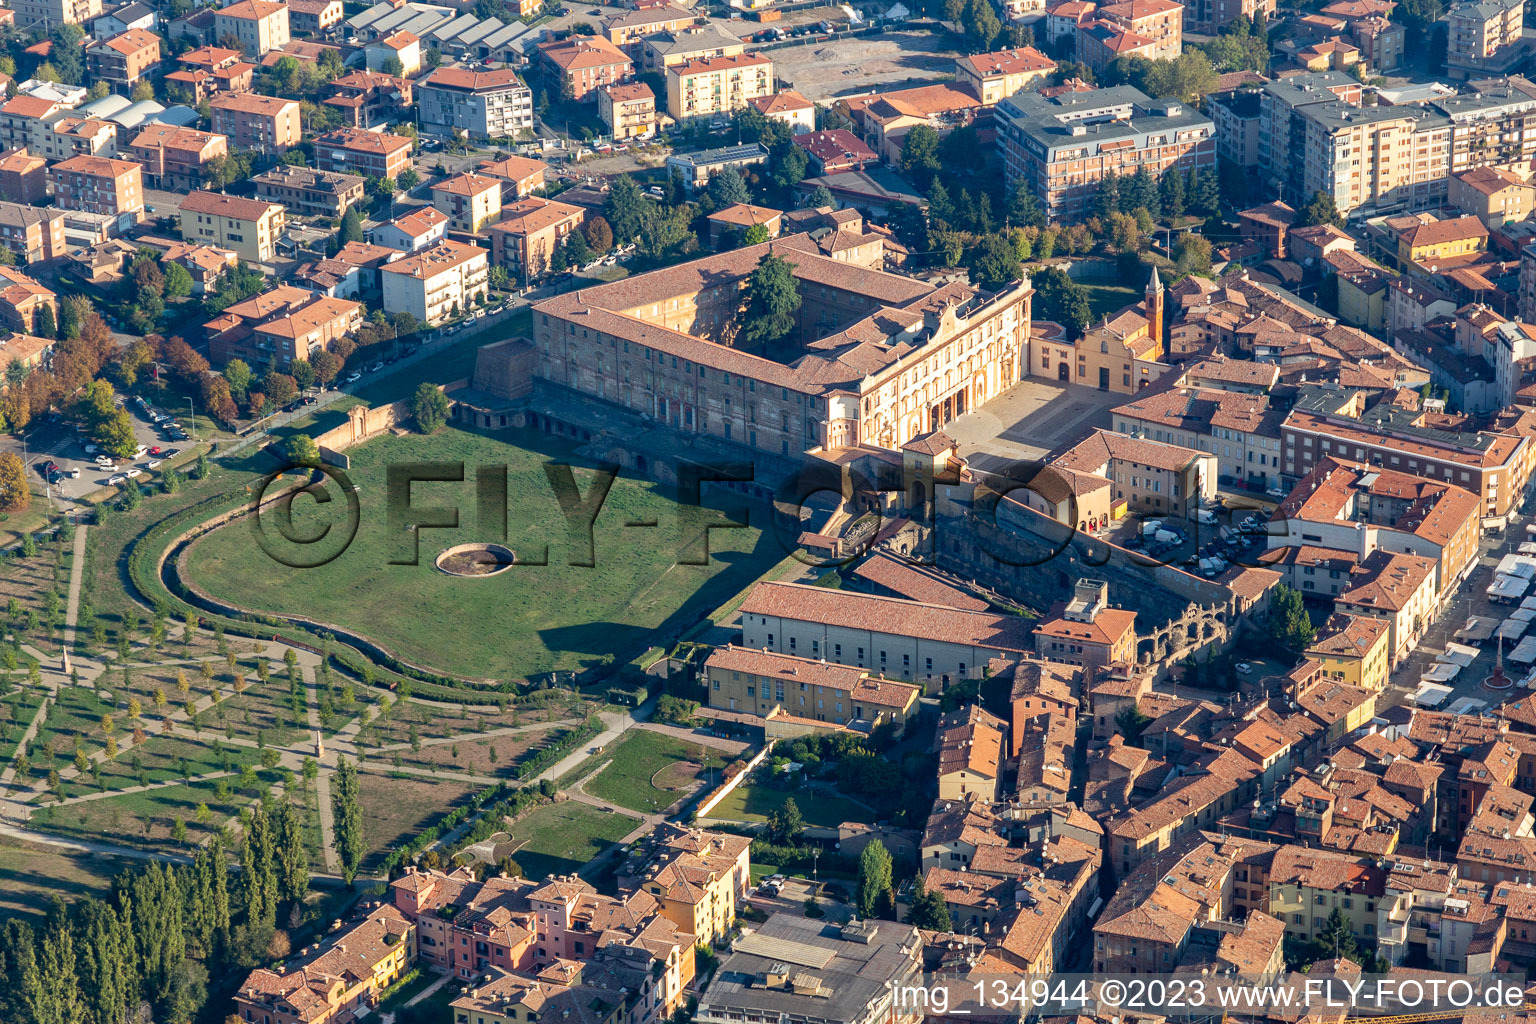 Luftbild von Parco Ducale, Giardini Ducali und Palazzo Ducale in Sassuolo im Bundesland Modena, Italien